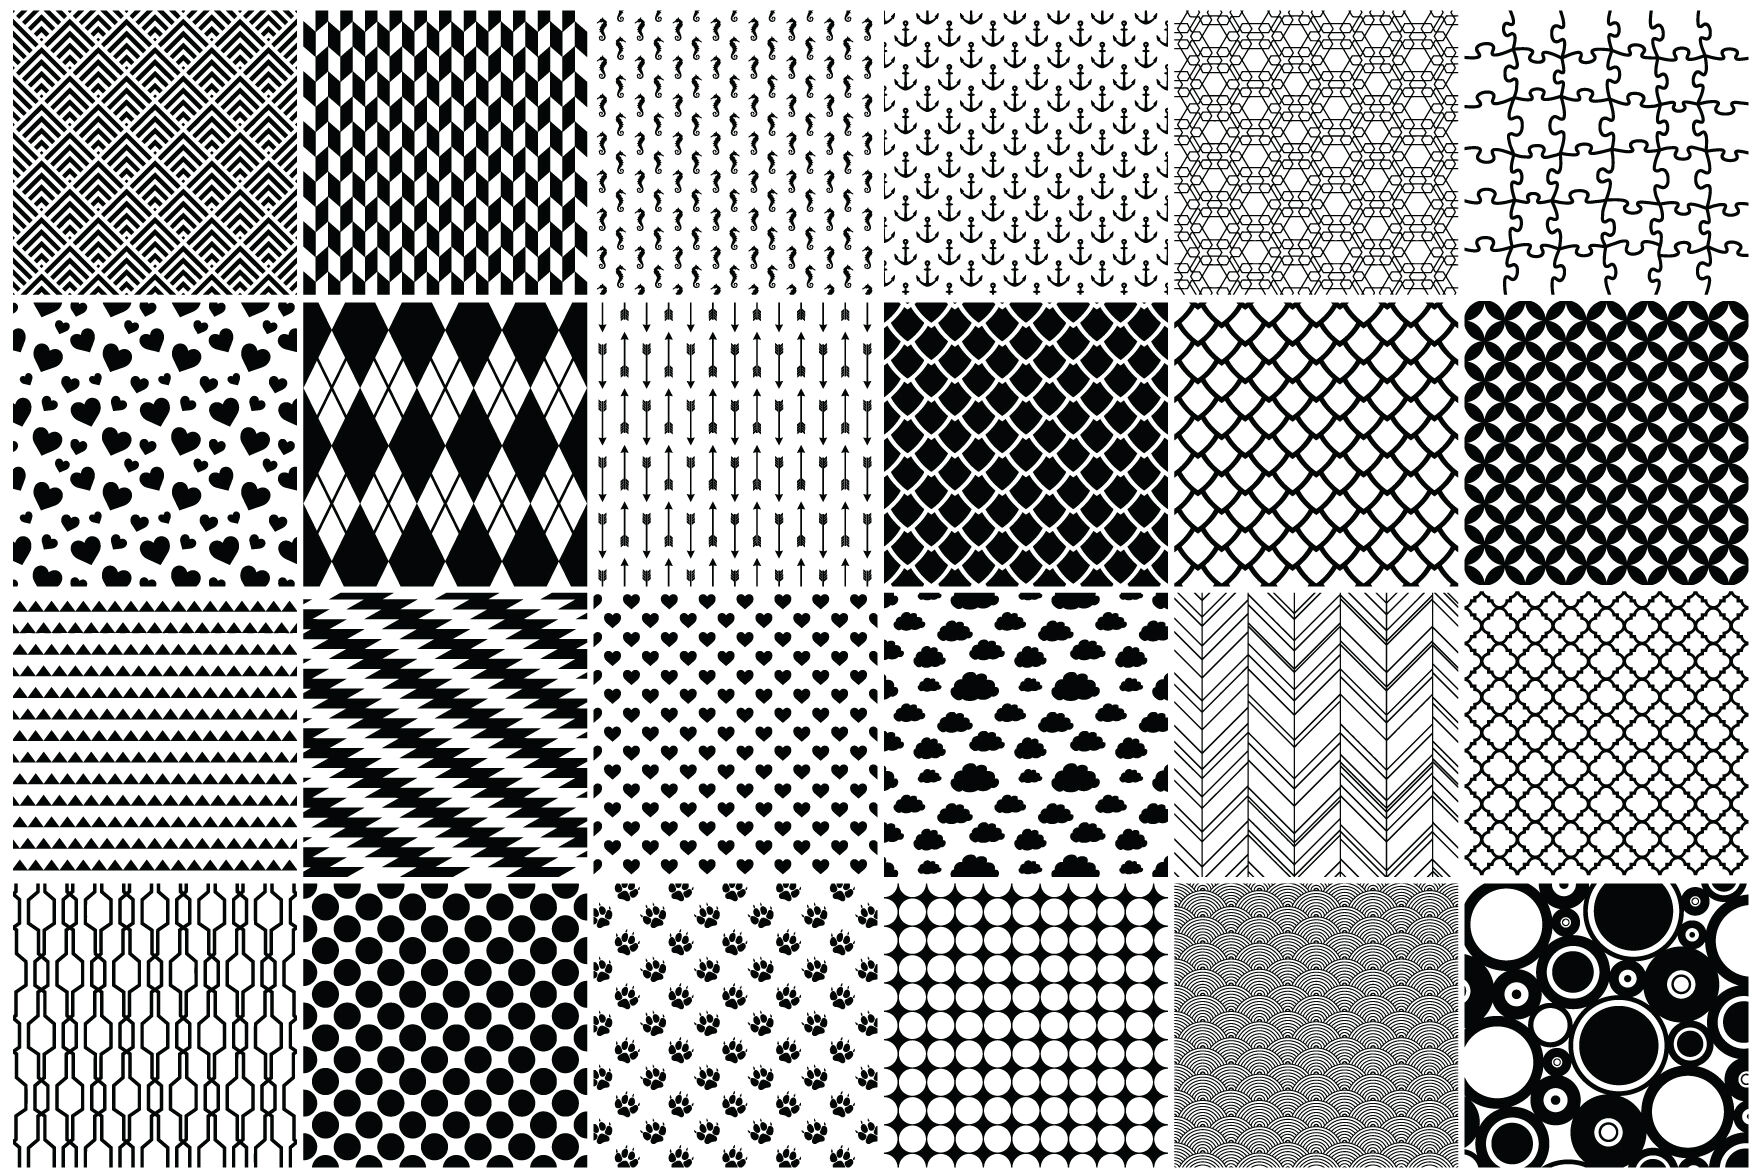 Download 75 Patterns Svg Bundle Background Pattern Svg Cut Files By Doodle Cloud Studio Thehungryjpeg Com